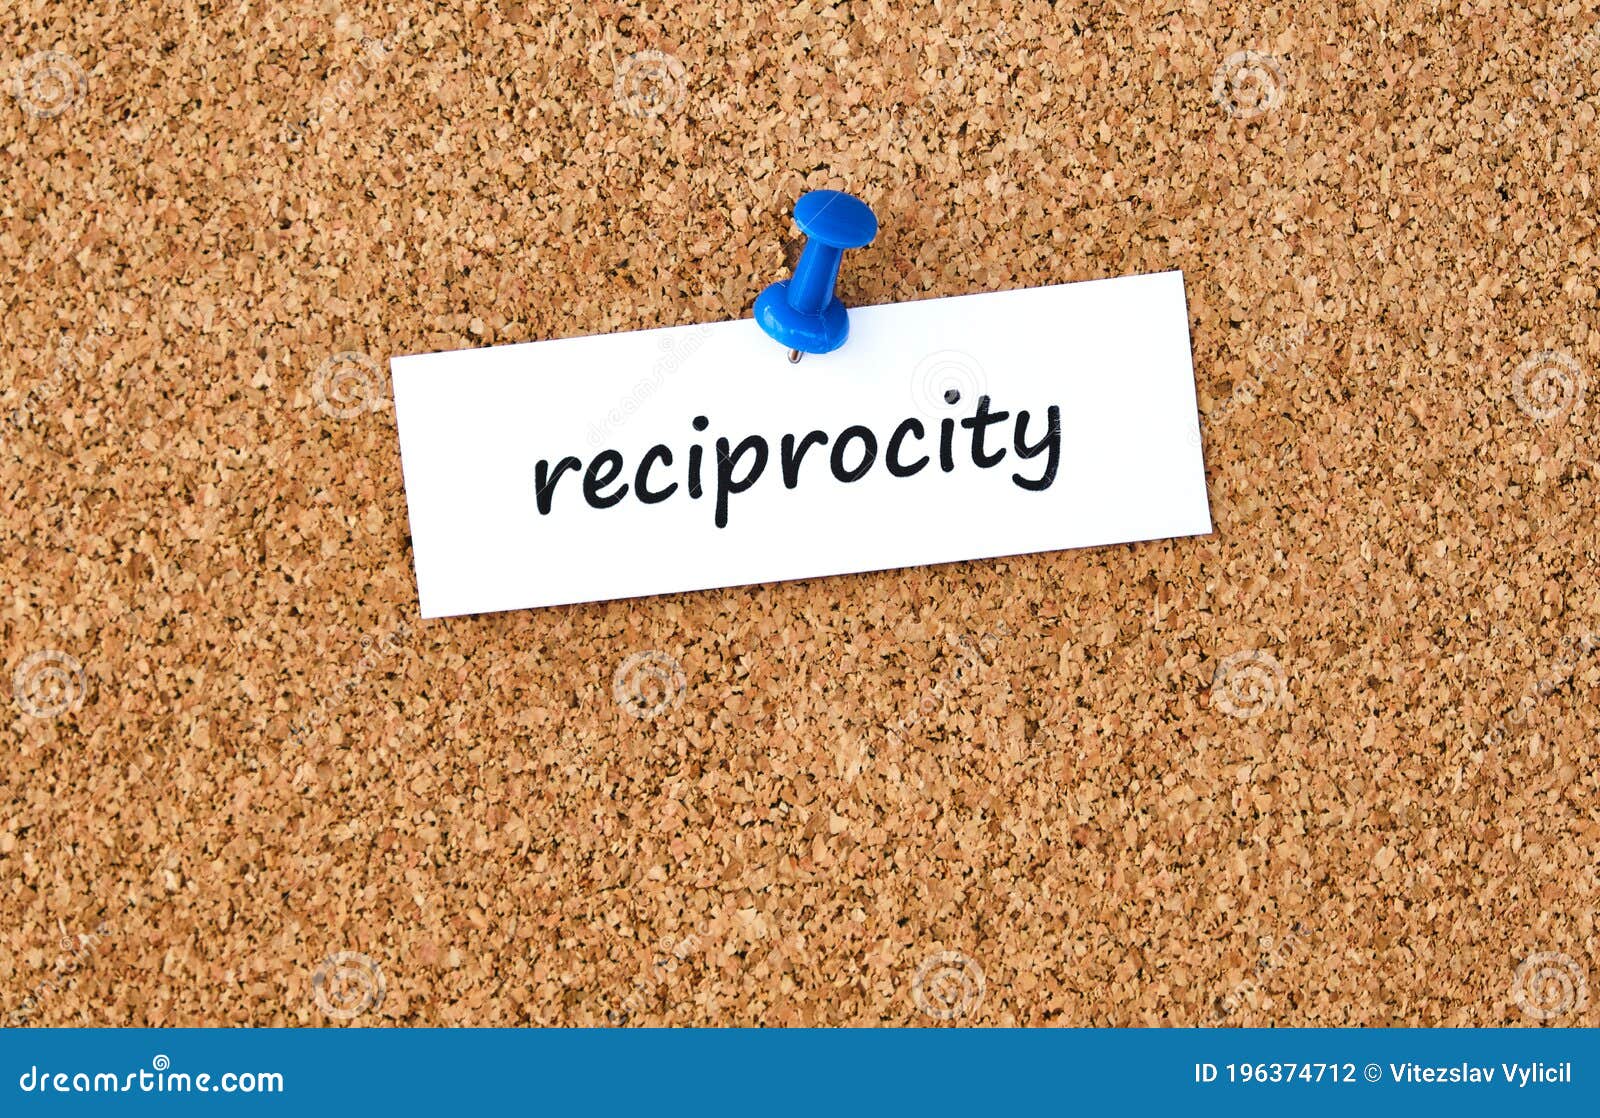 reciprocity. word written on a piece of paper, cork board background